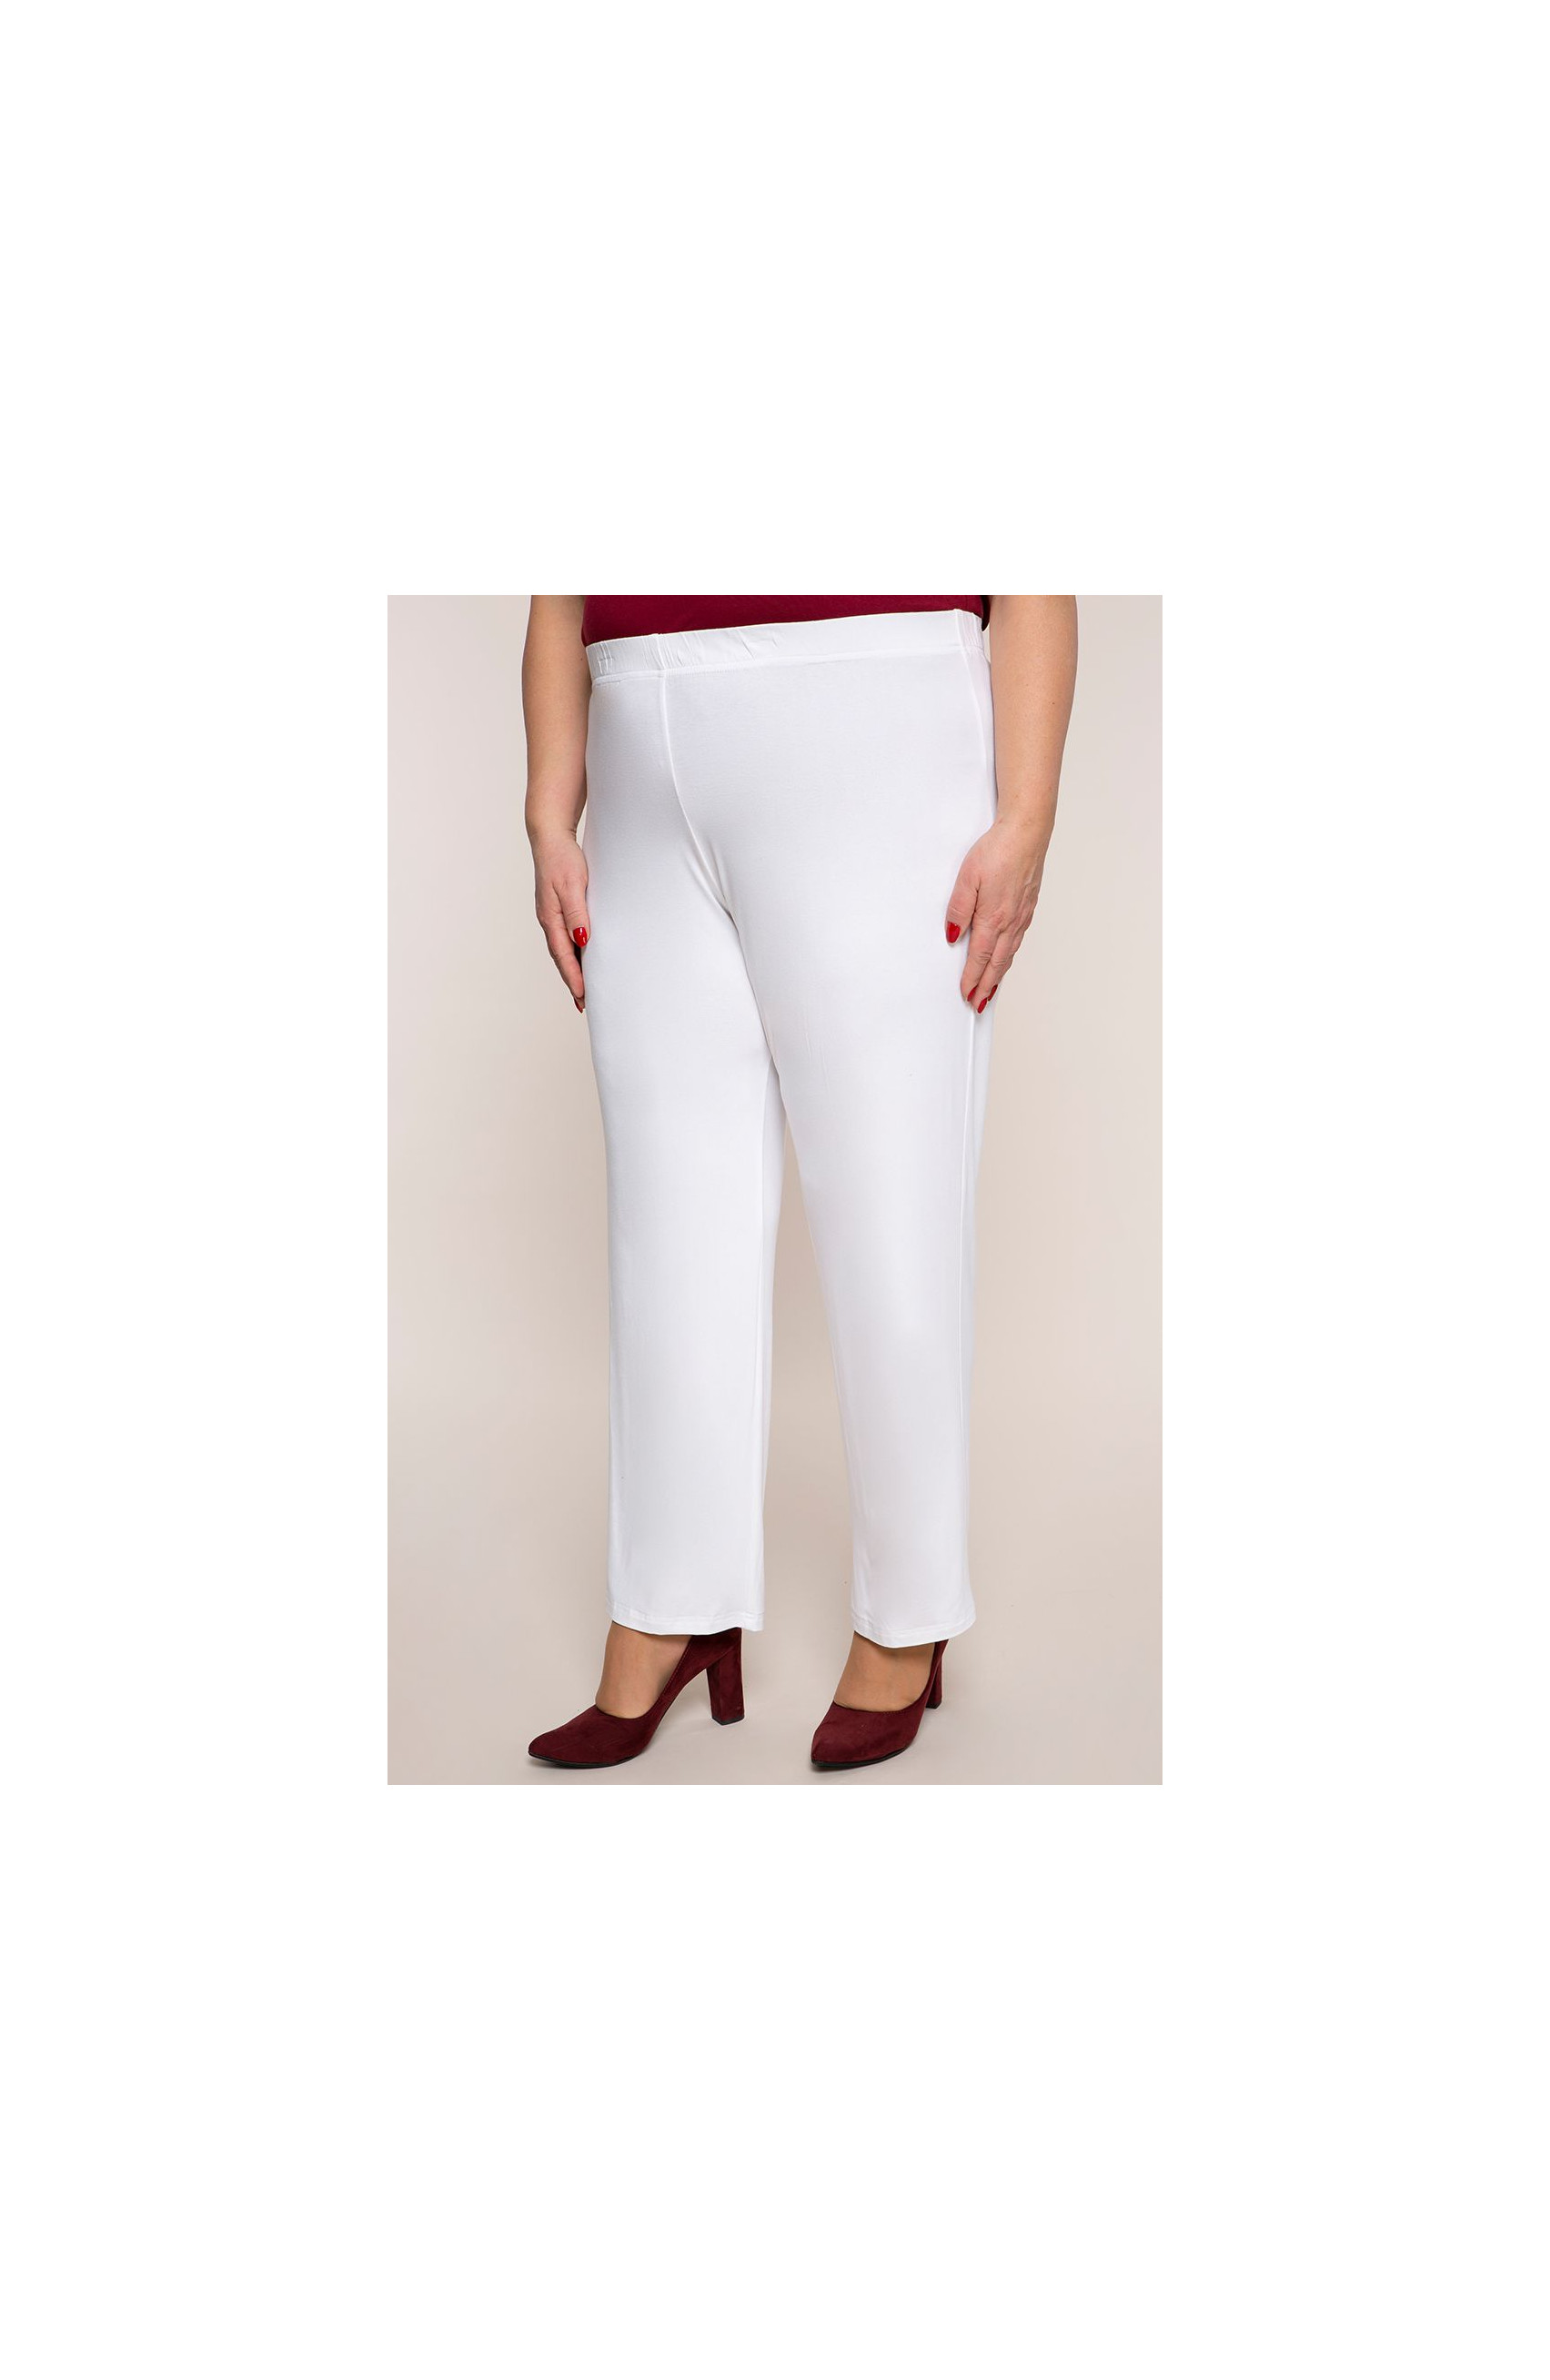 Pantaloni clasici subțiri albi